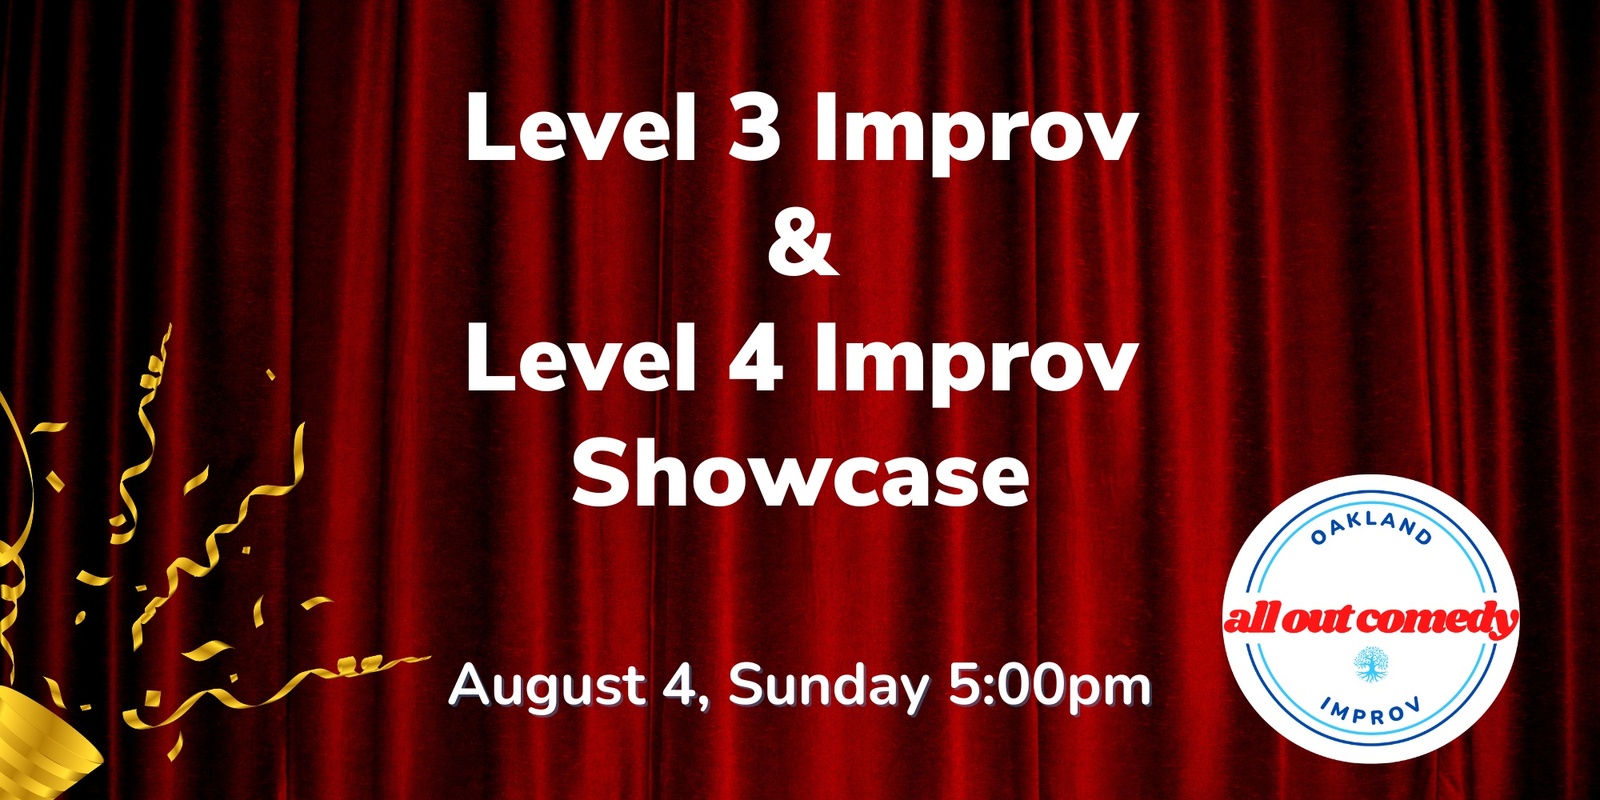 Banner image for Level 3 Improv & Level 4 Improv Showcase